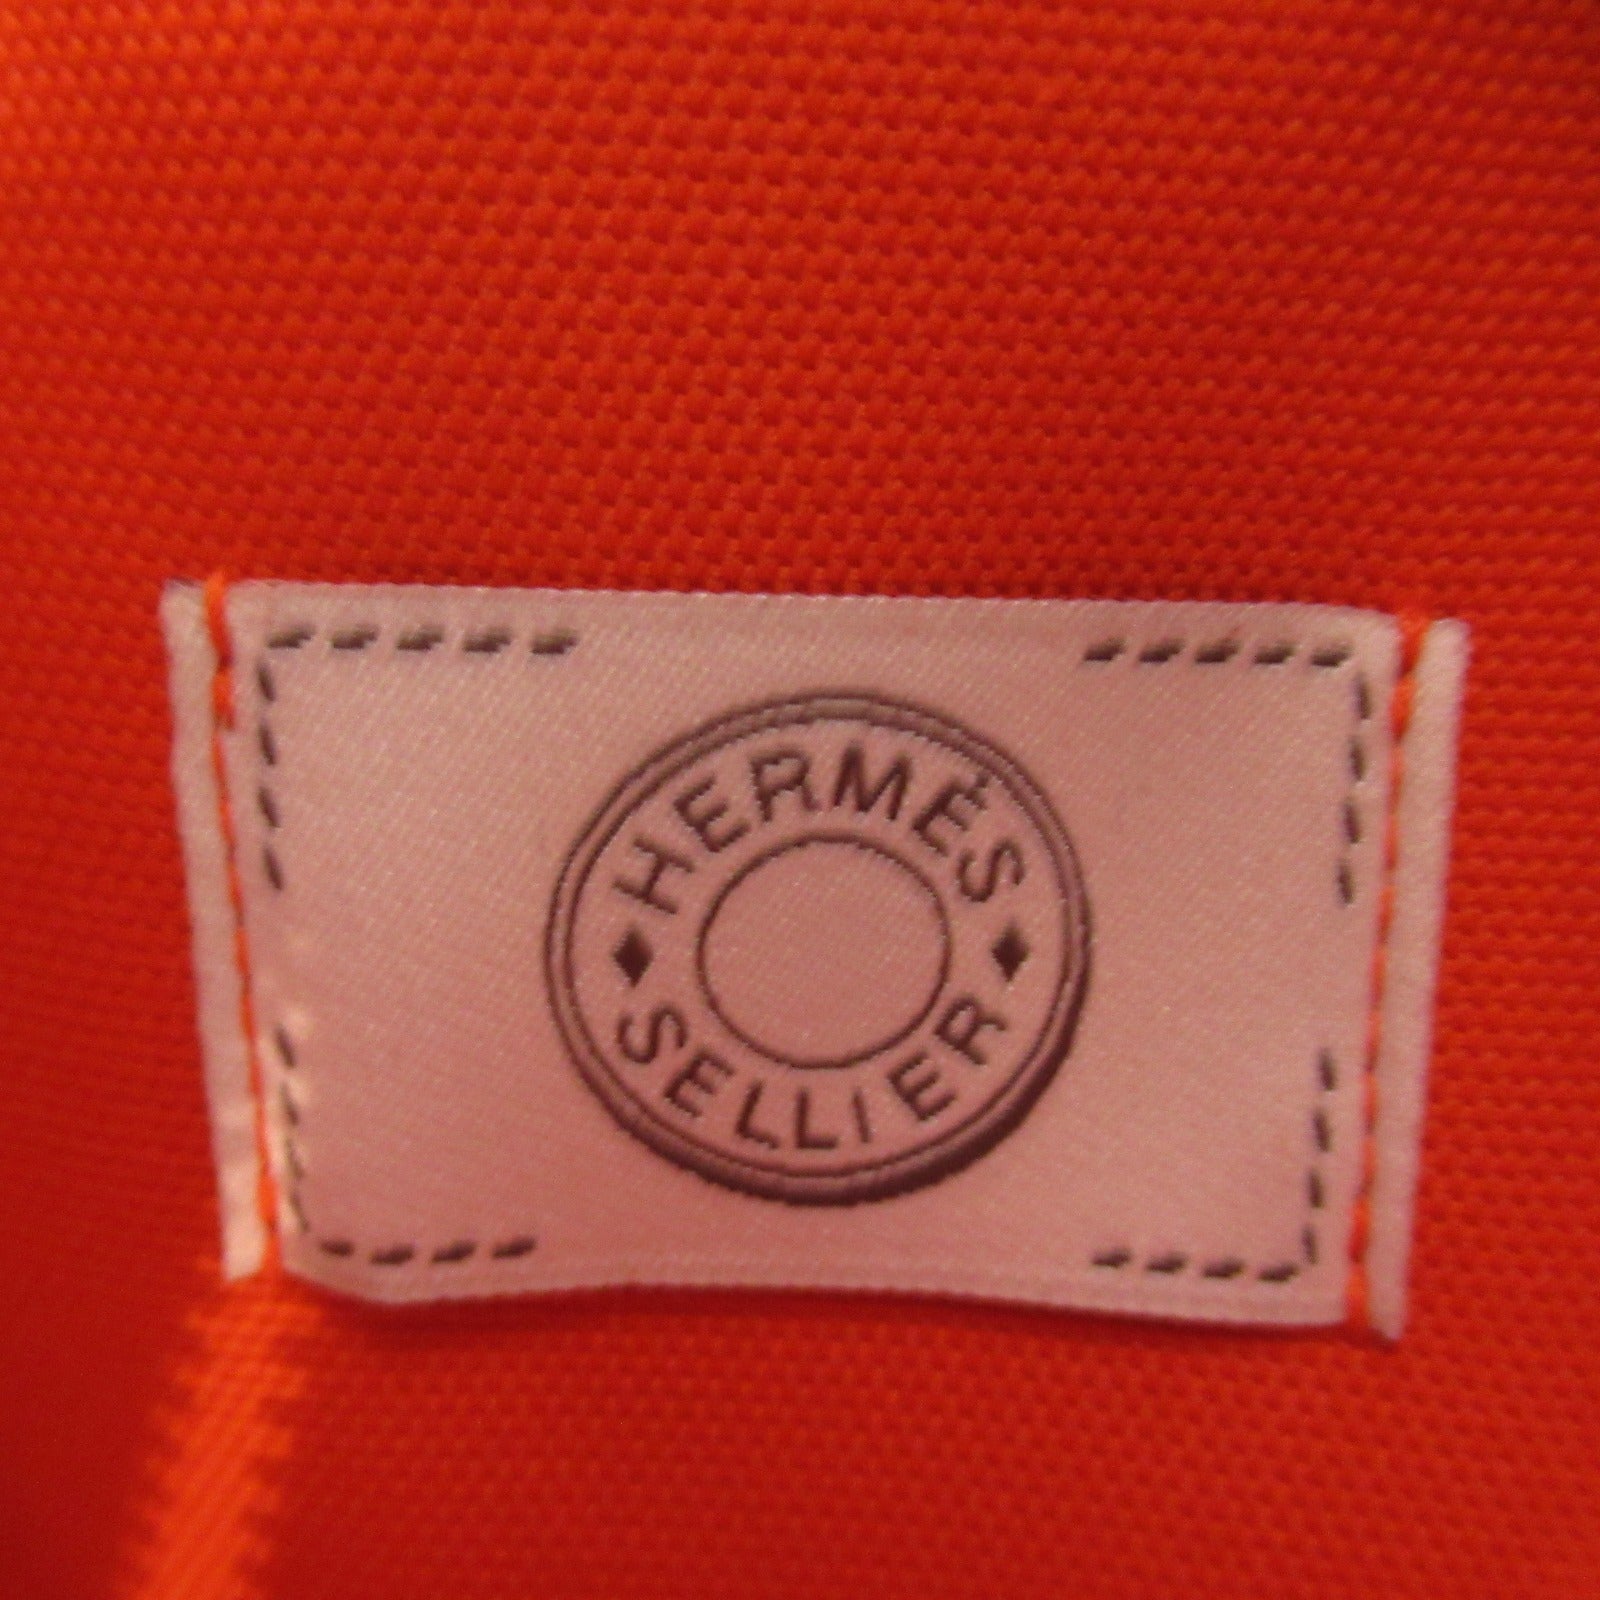 Hermes Hermes Sacked Panthers Gourmet Bag Bag Bag Bag Backpack Bag Leather Towershedron   Navy  800642EK